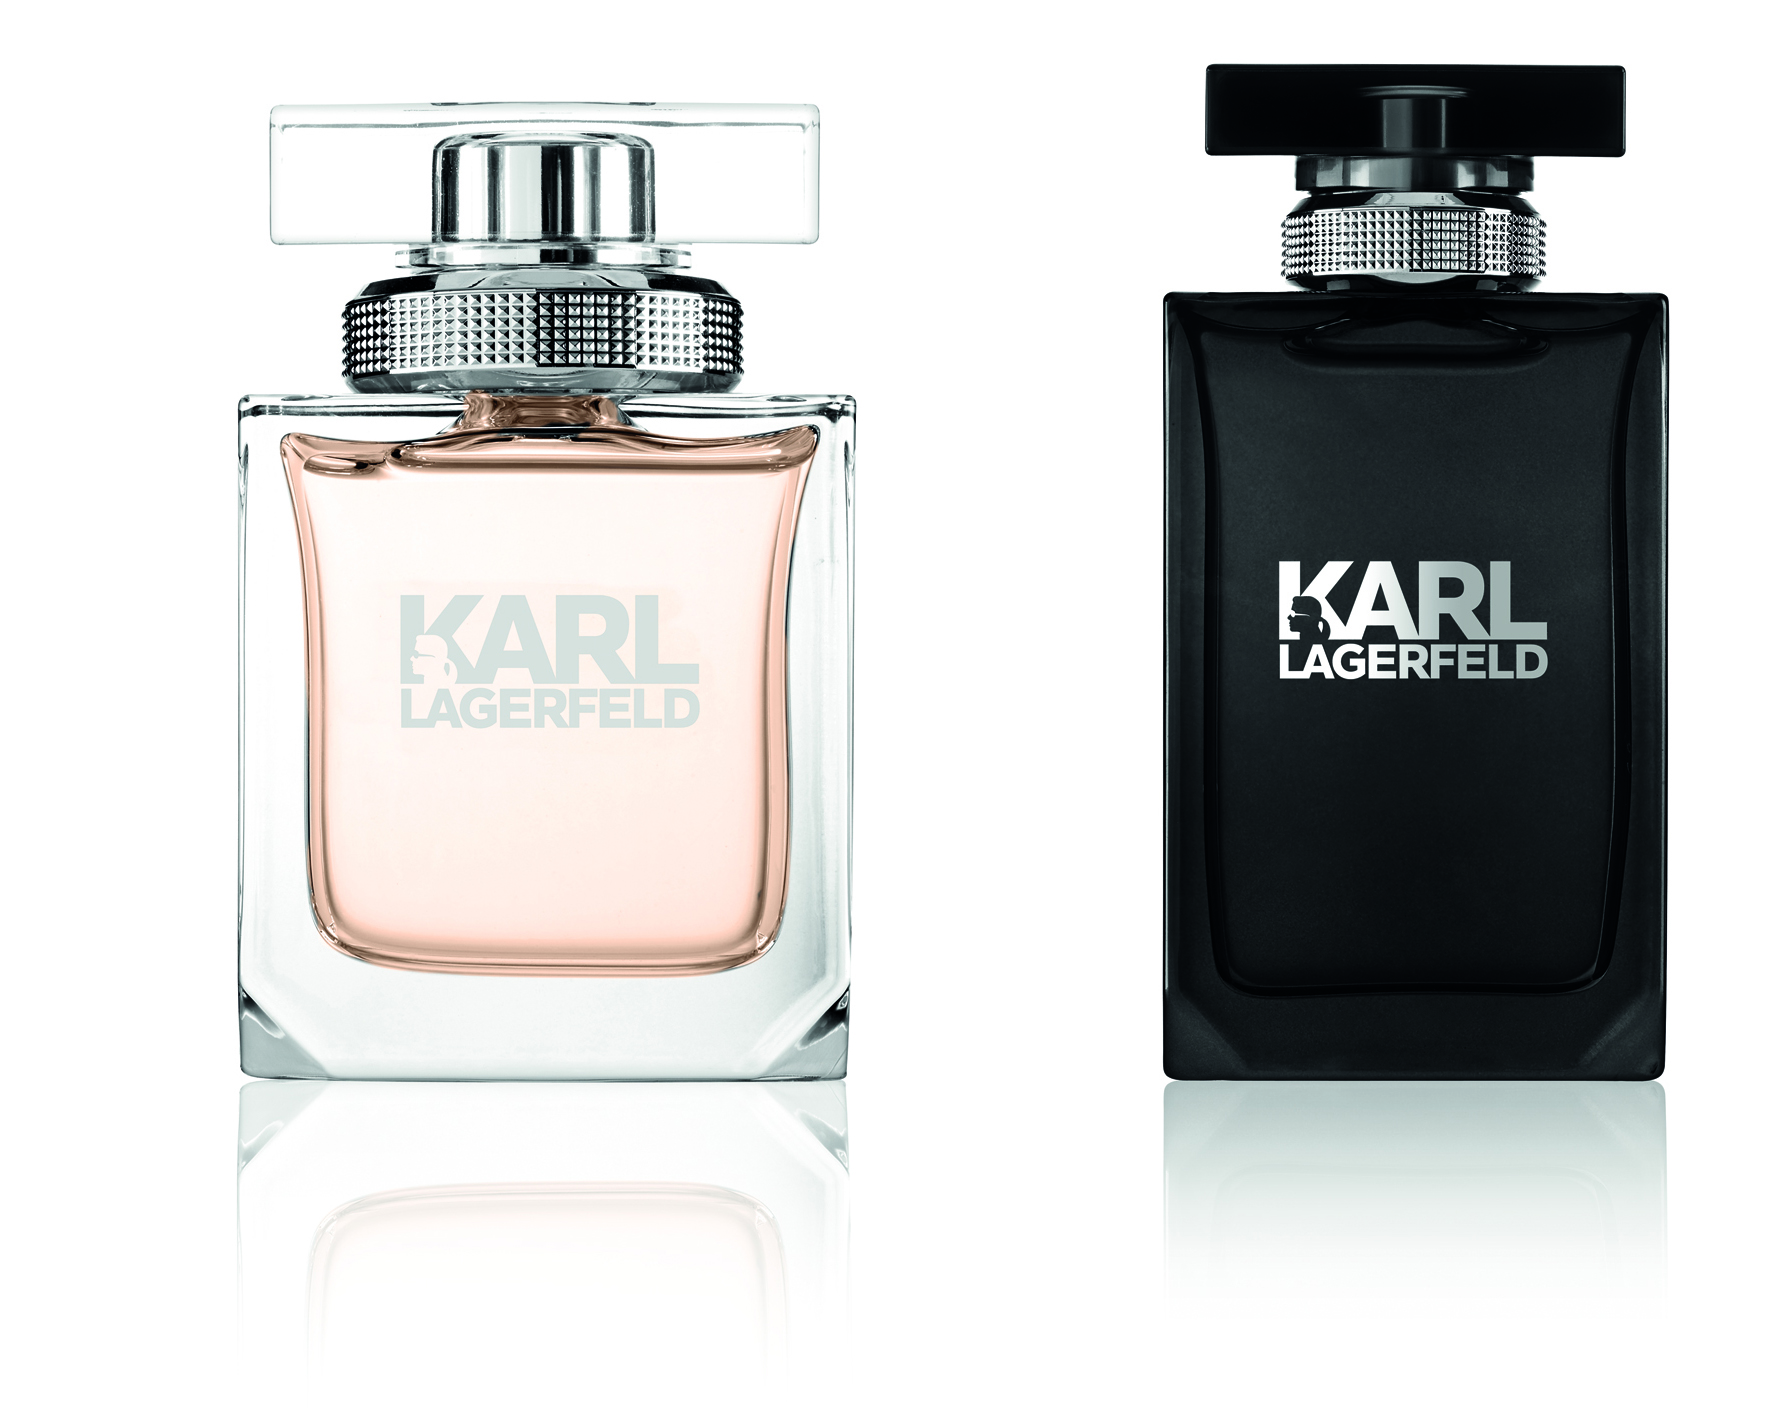 Karl Lagerfeld perfumes